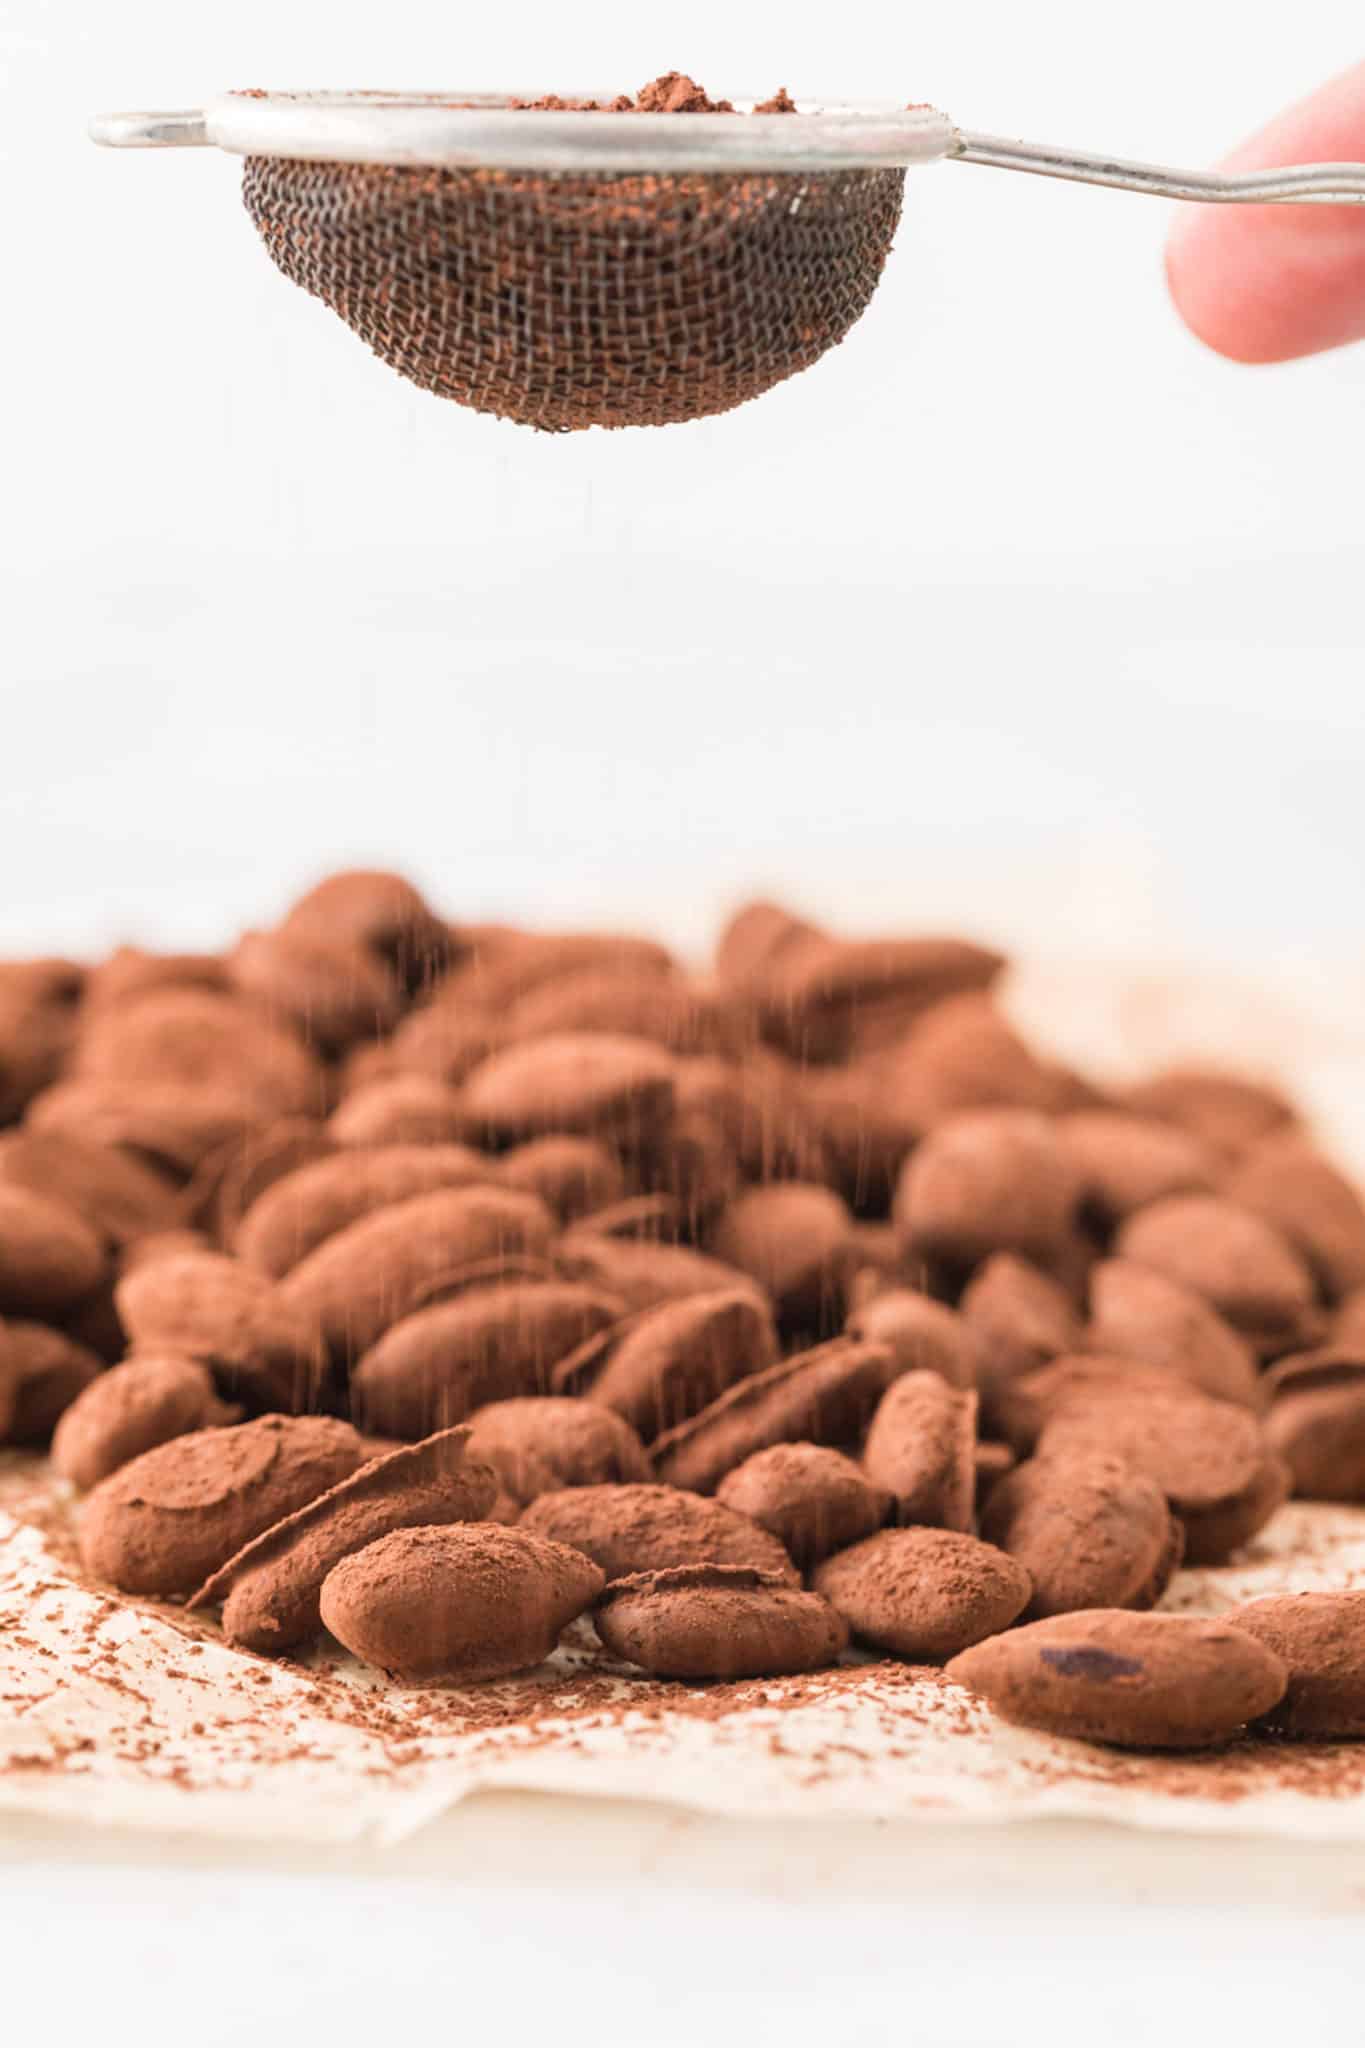 sifting cocoa powder onto almonds